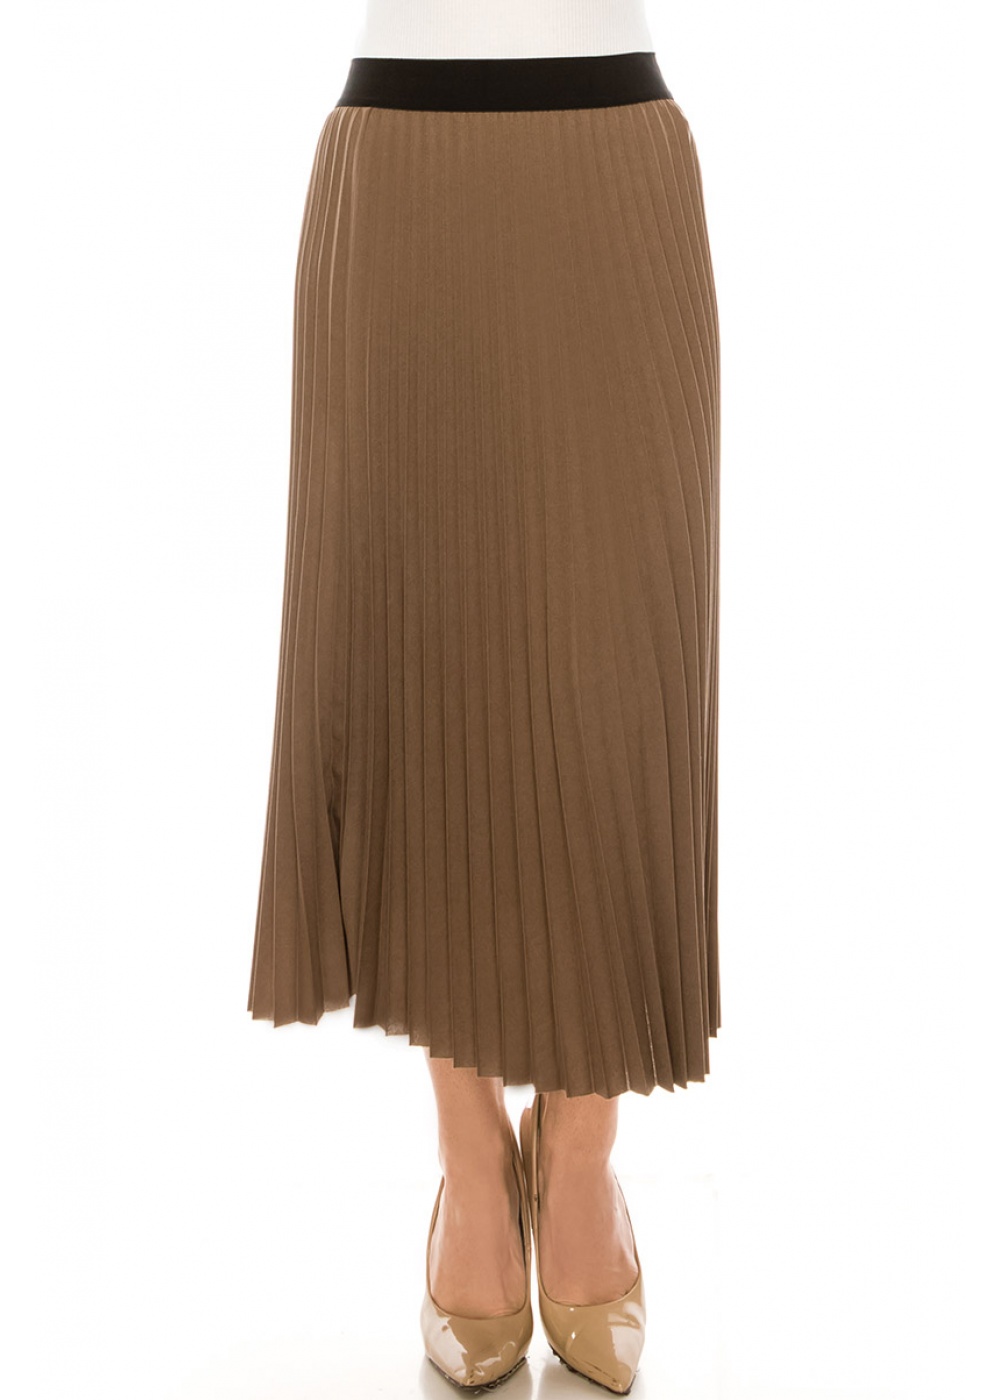 Skirt SK080 Brown